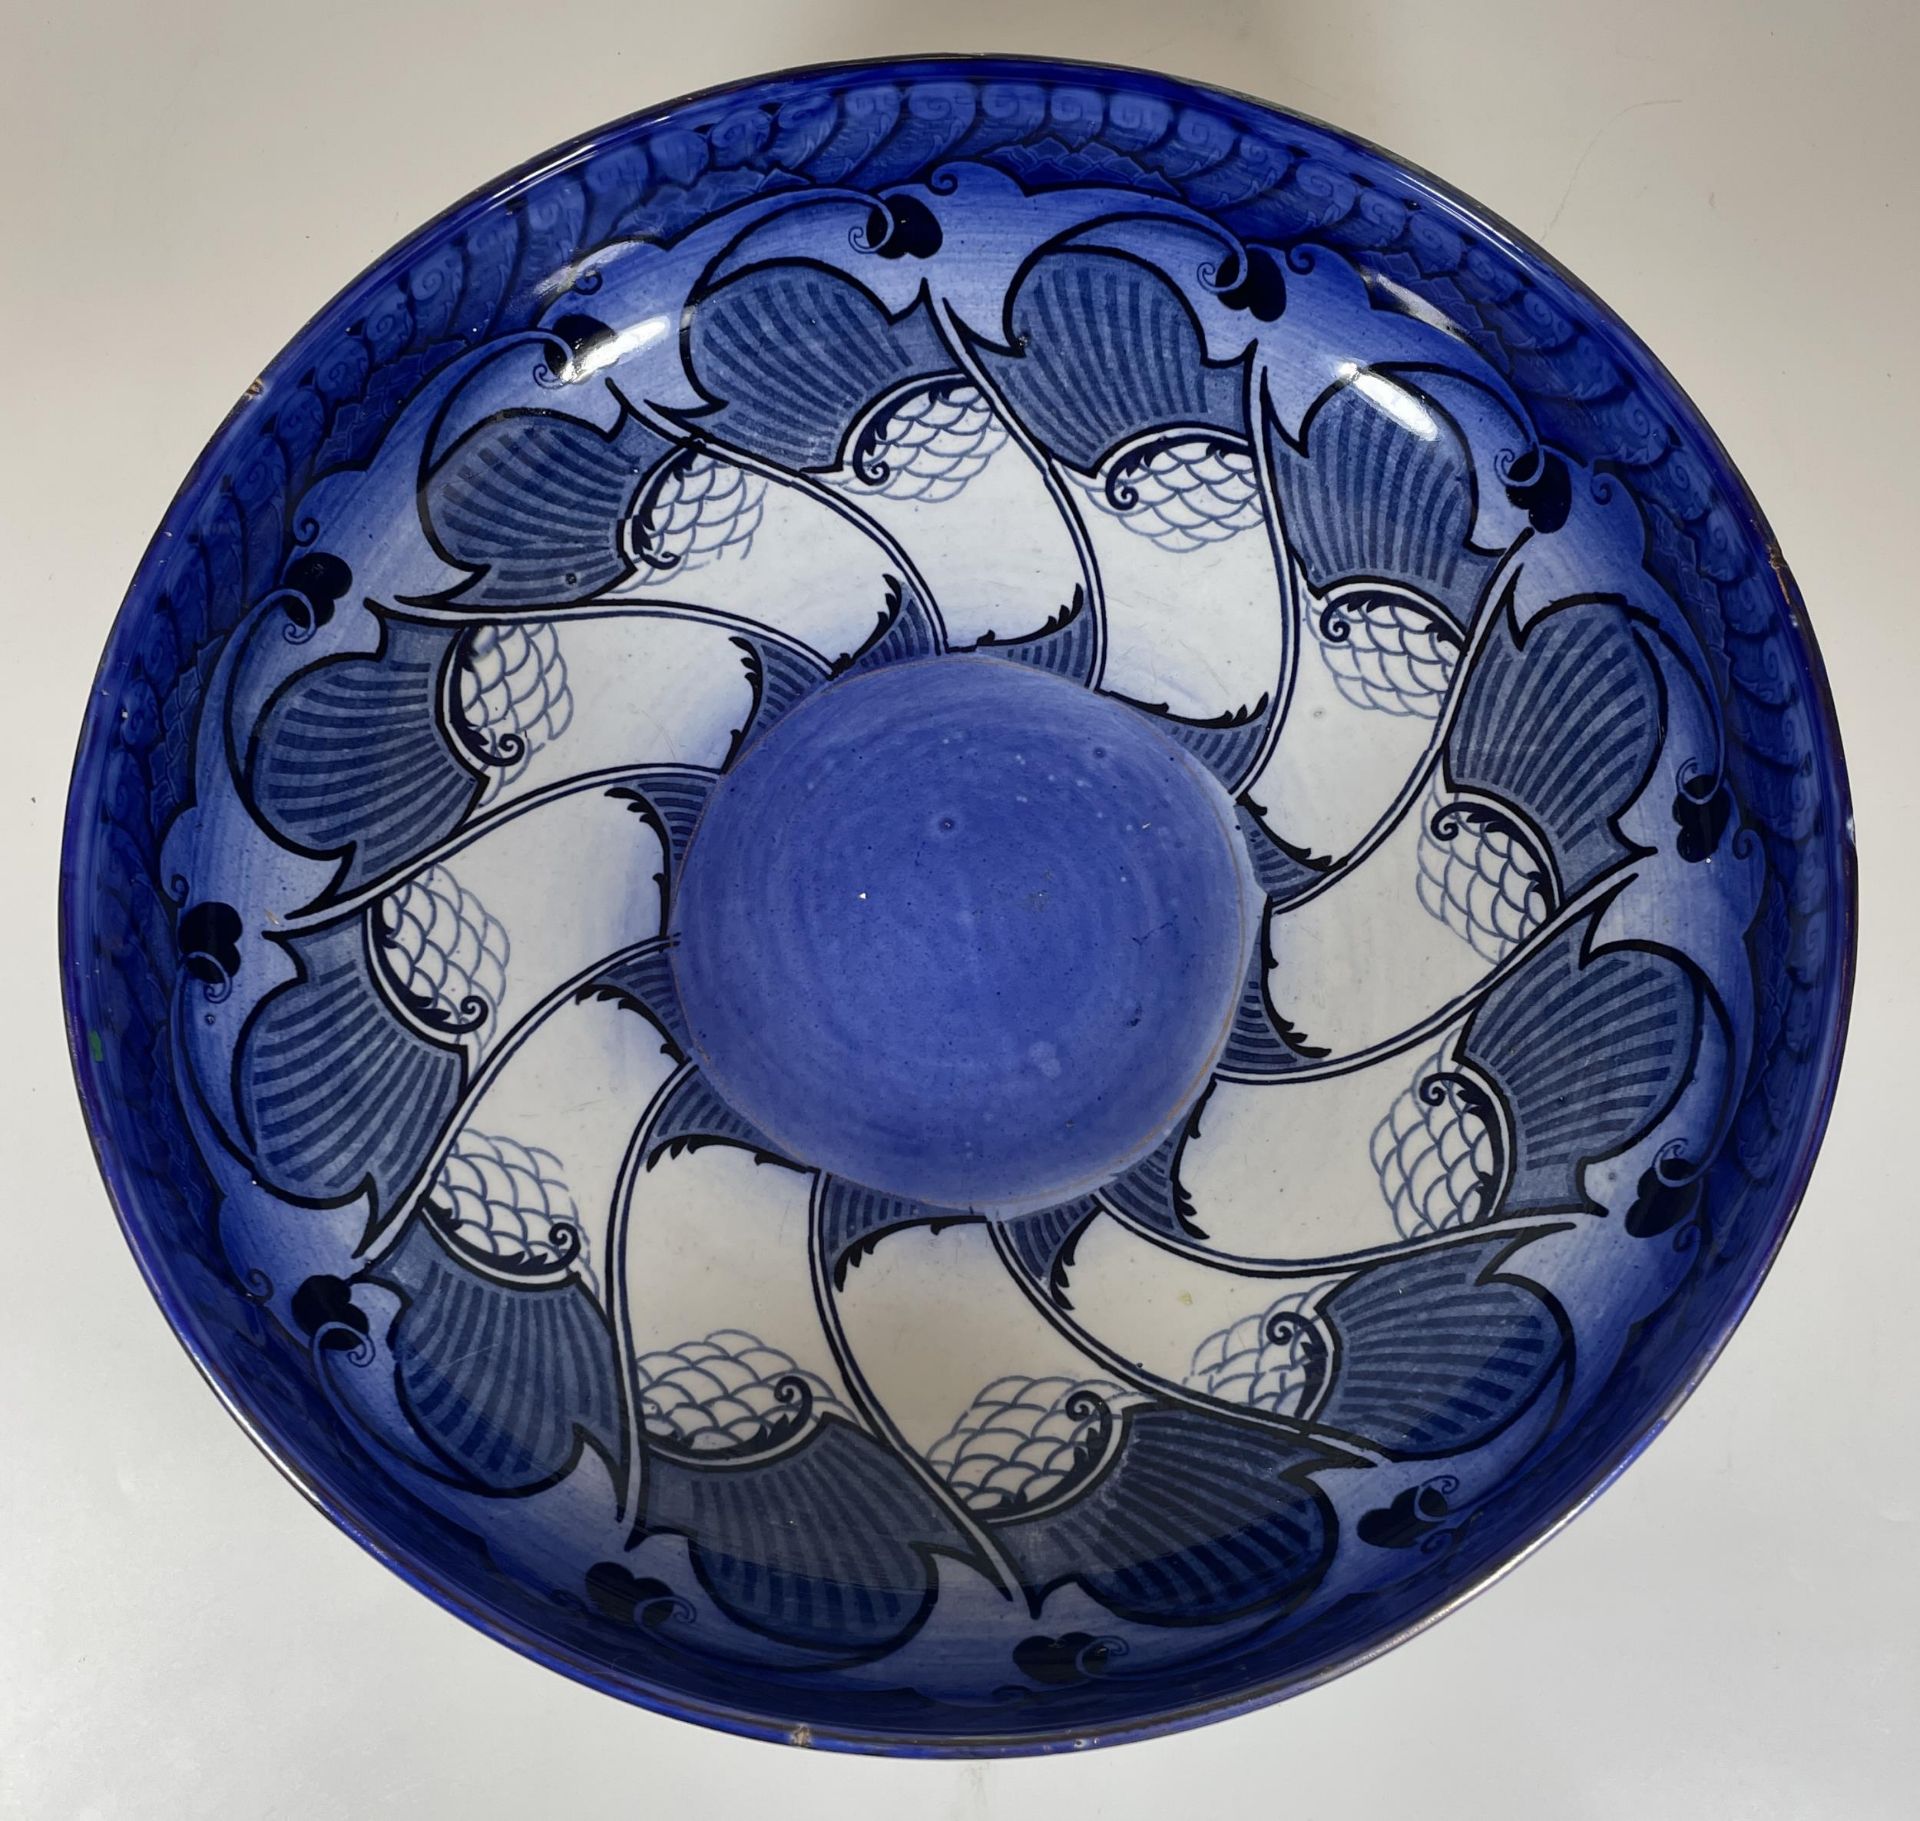 A LARGE ART NOUVEAU ROYAL DOULTON BLUE AND WHITE GEOMETRIC FRUIT BOWL WITH ARTISTS MONOGRAM TO BASE